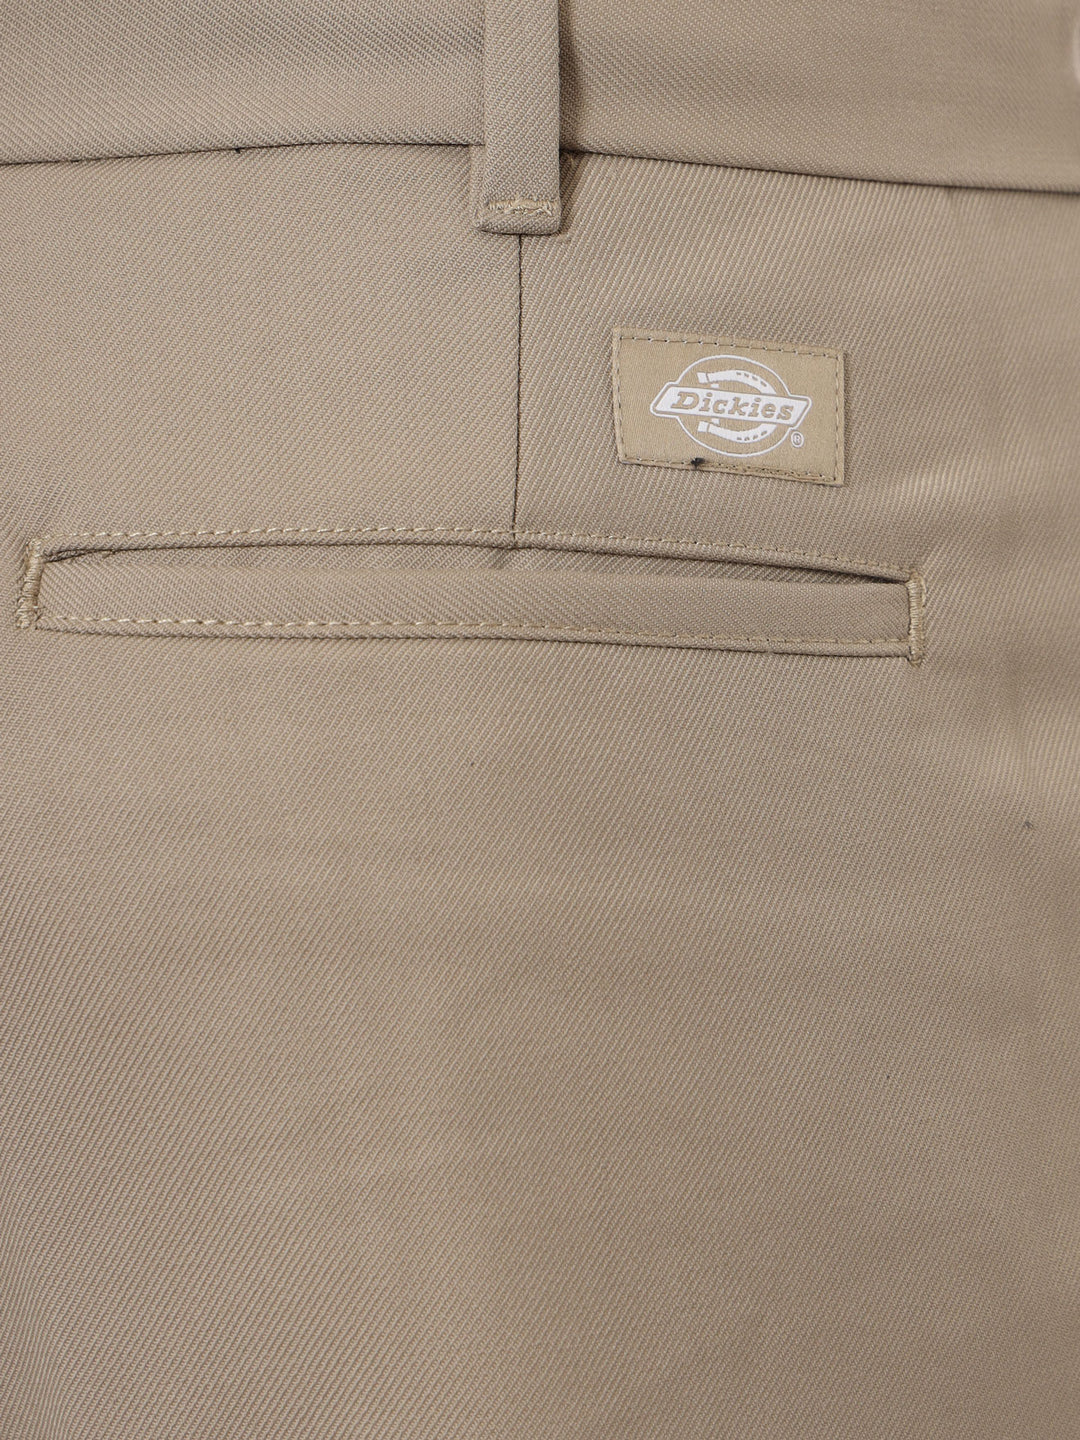 Pantalone in misto lana con patch logo